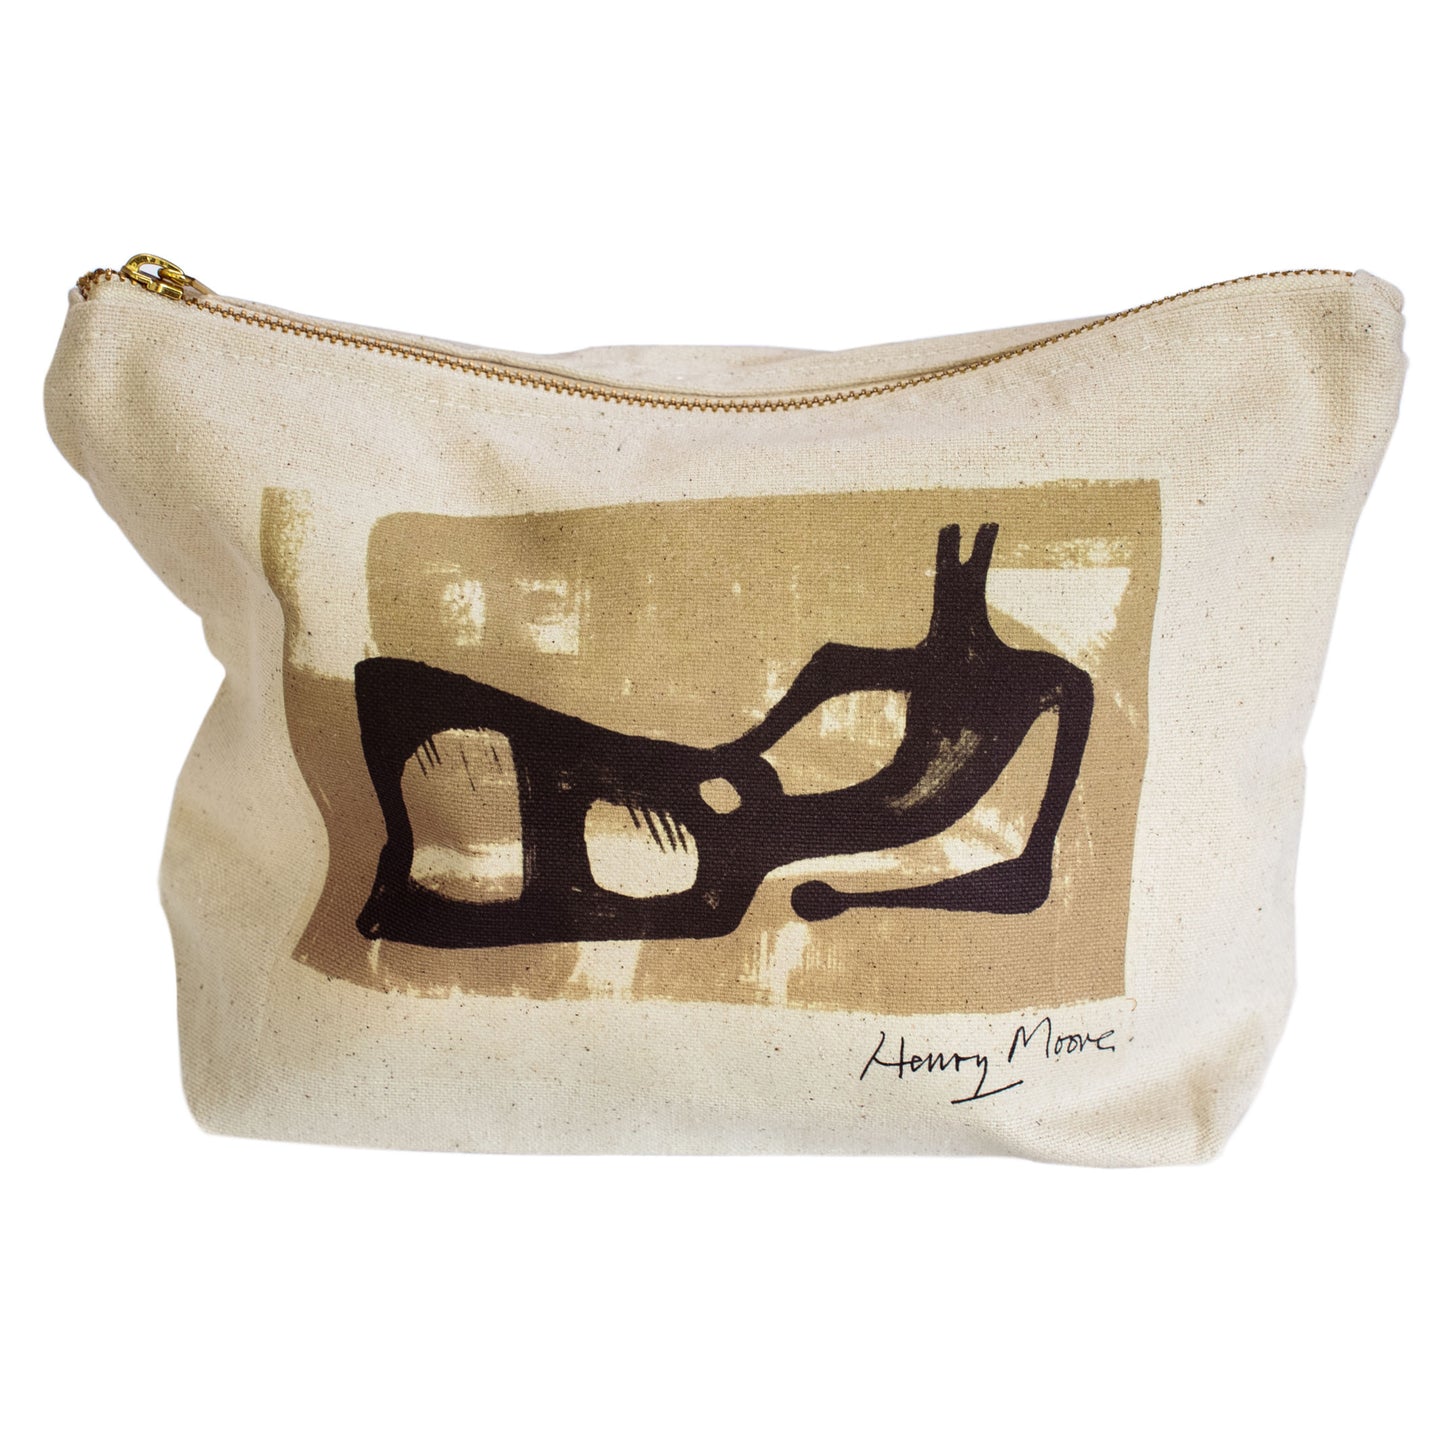 Zipped pouch bag (Reclining Figure)